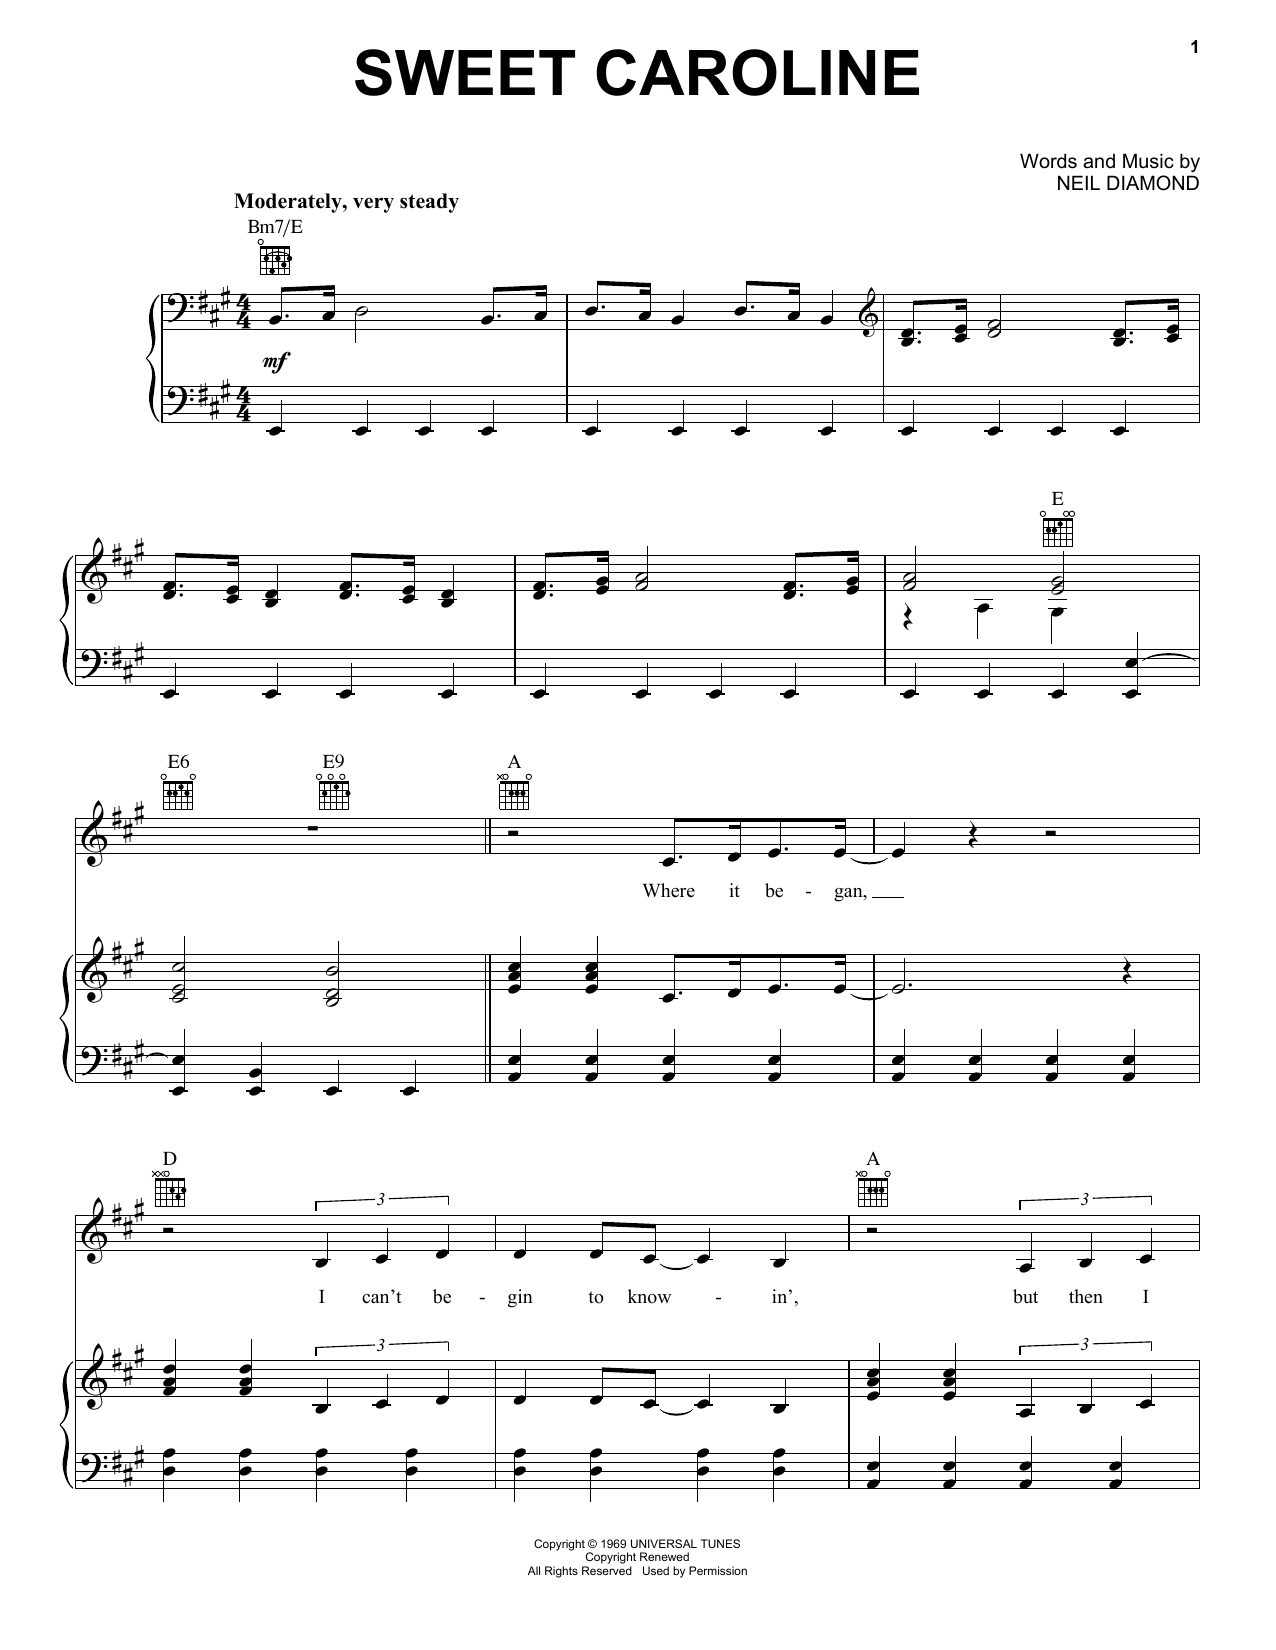 Neil Diamond Sweet Caroline Sheet Music Notes & Chords for Melody Line, Lyrics & Chords - Download or Print PDF